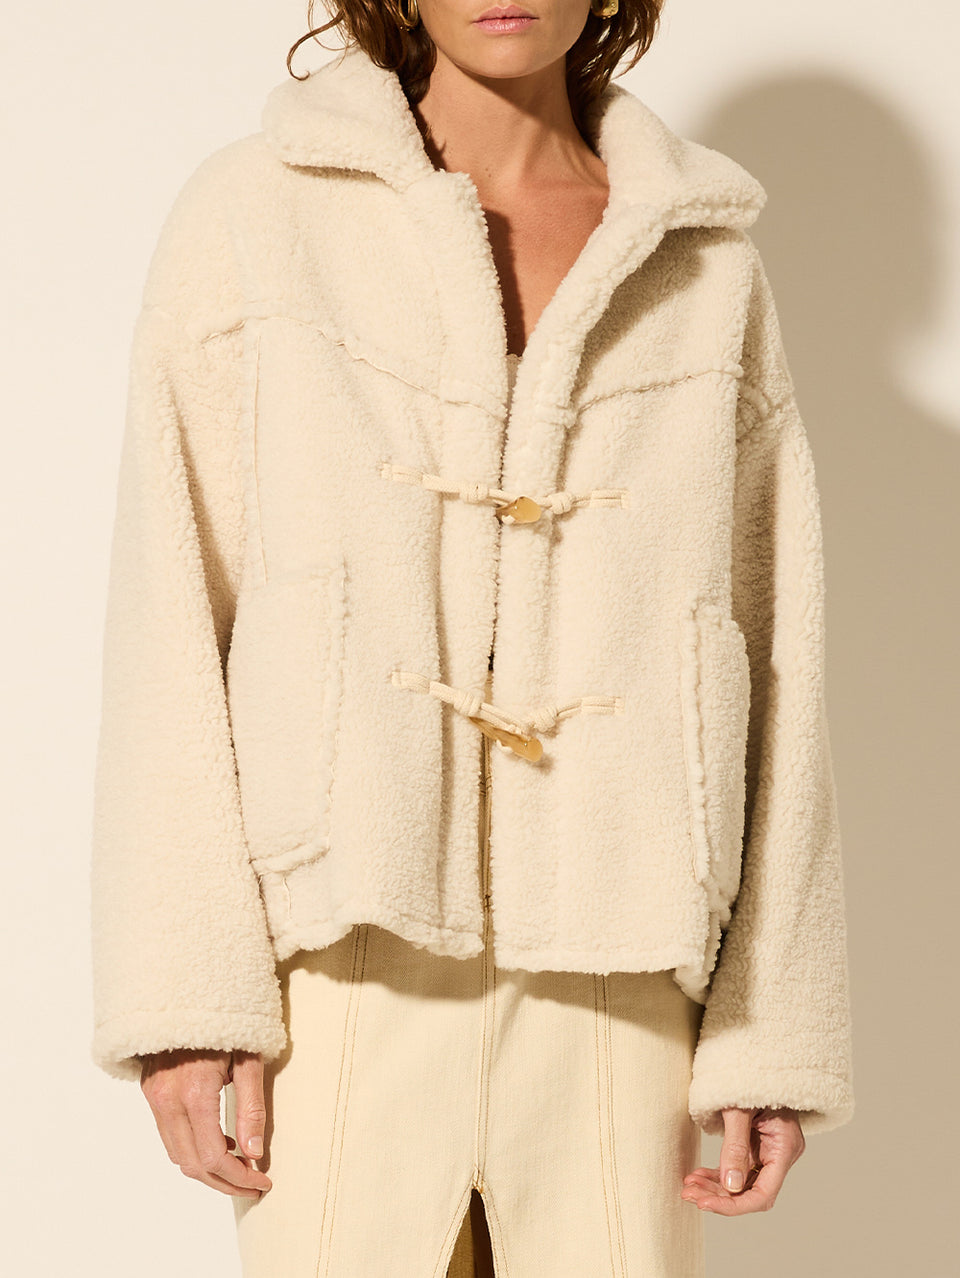 Lianna Jacket KIVARI | Model wears cream reversible jacket close